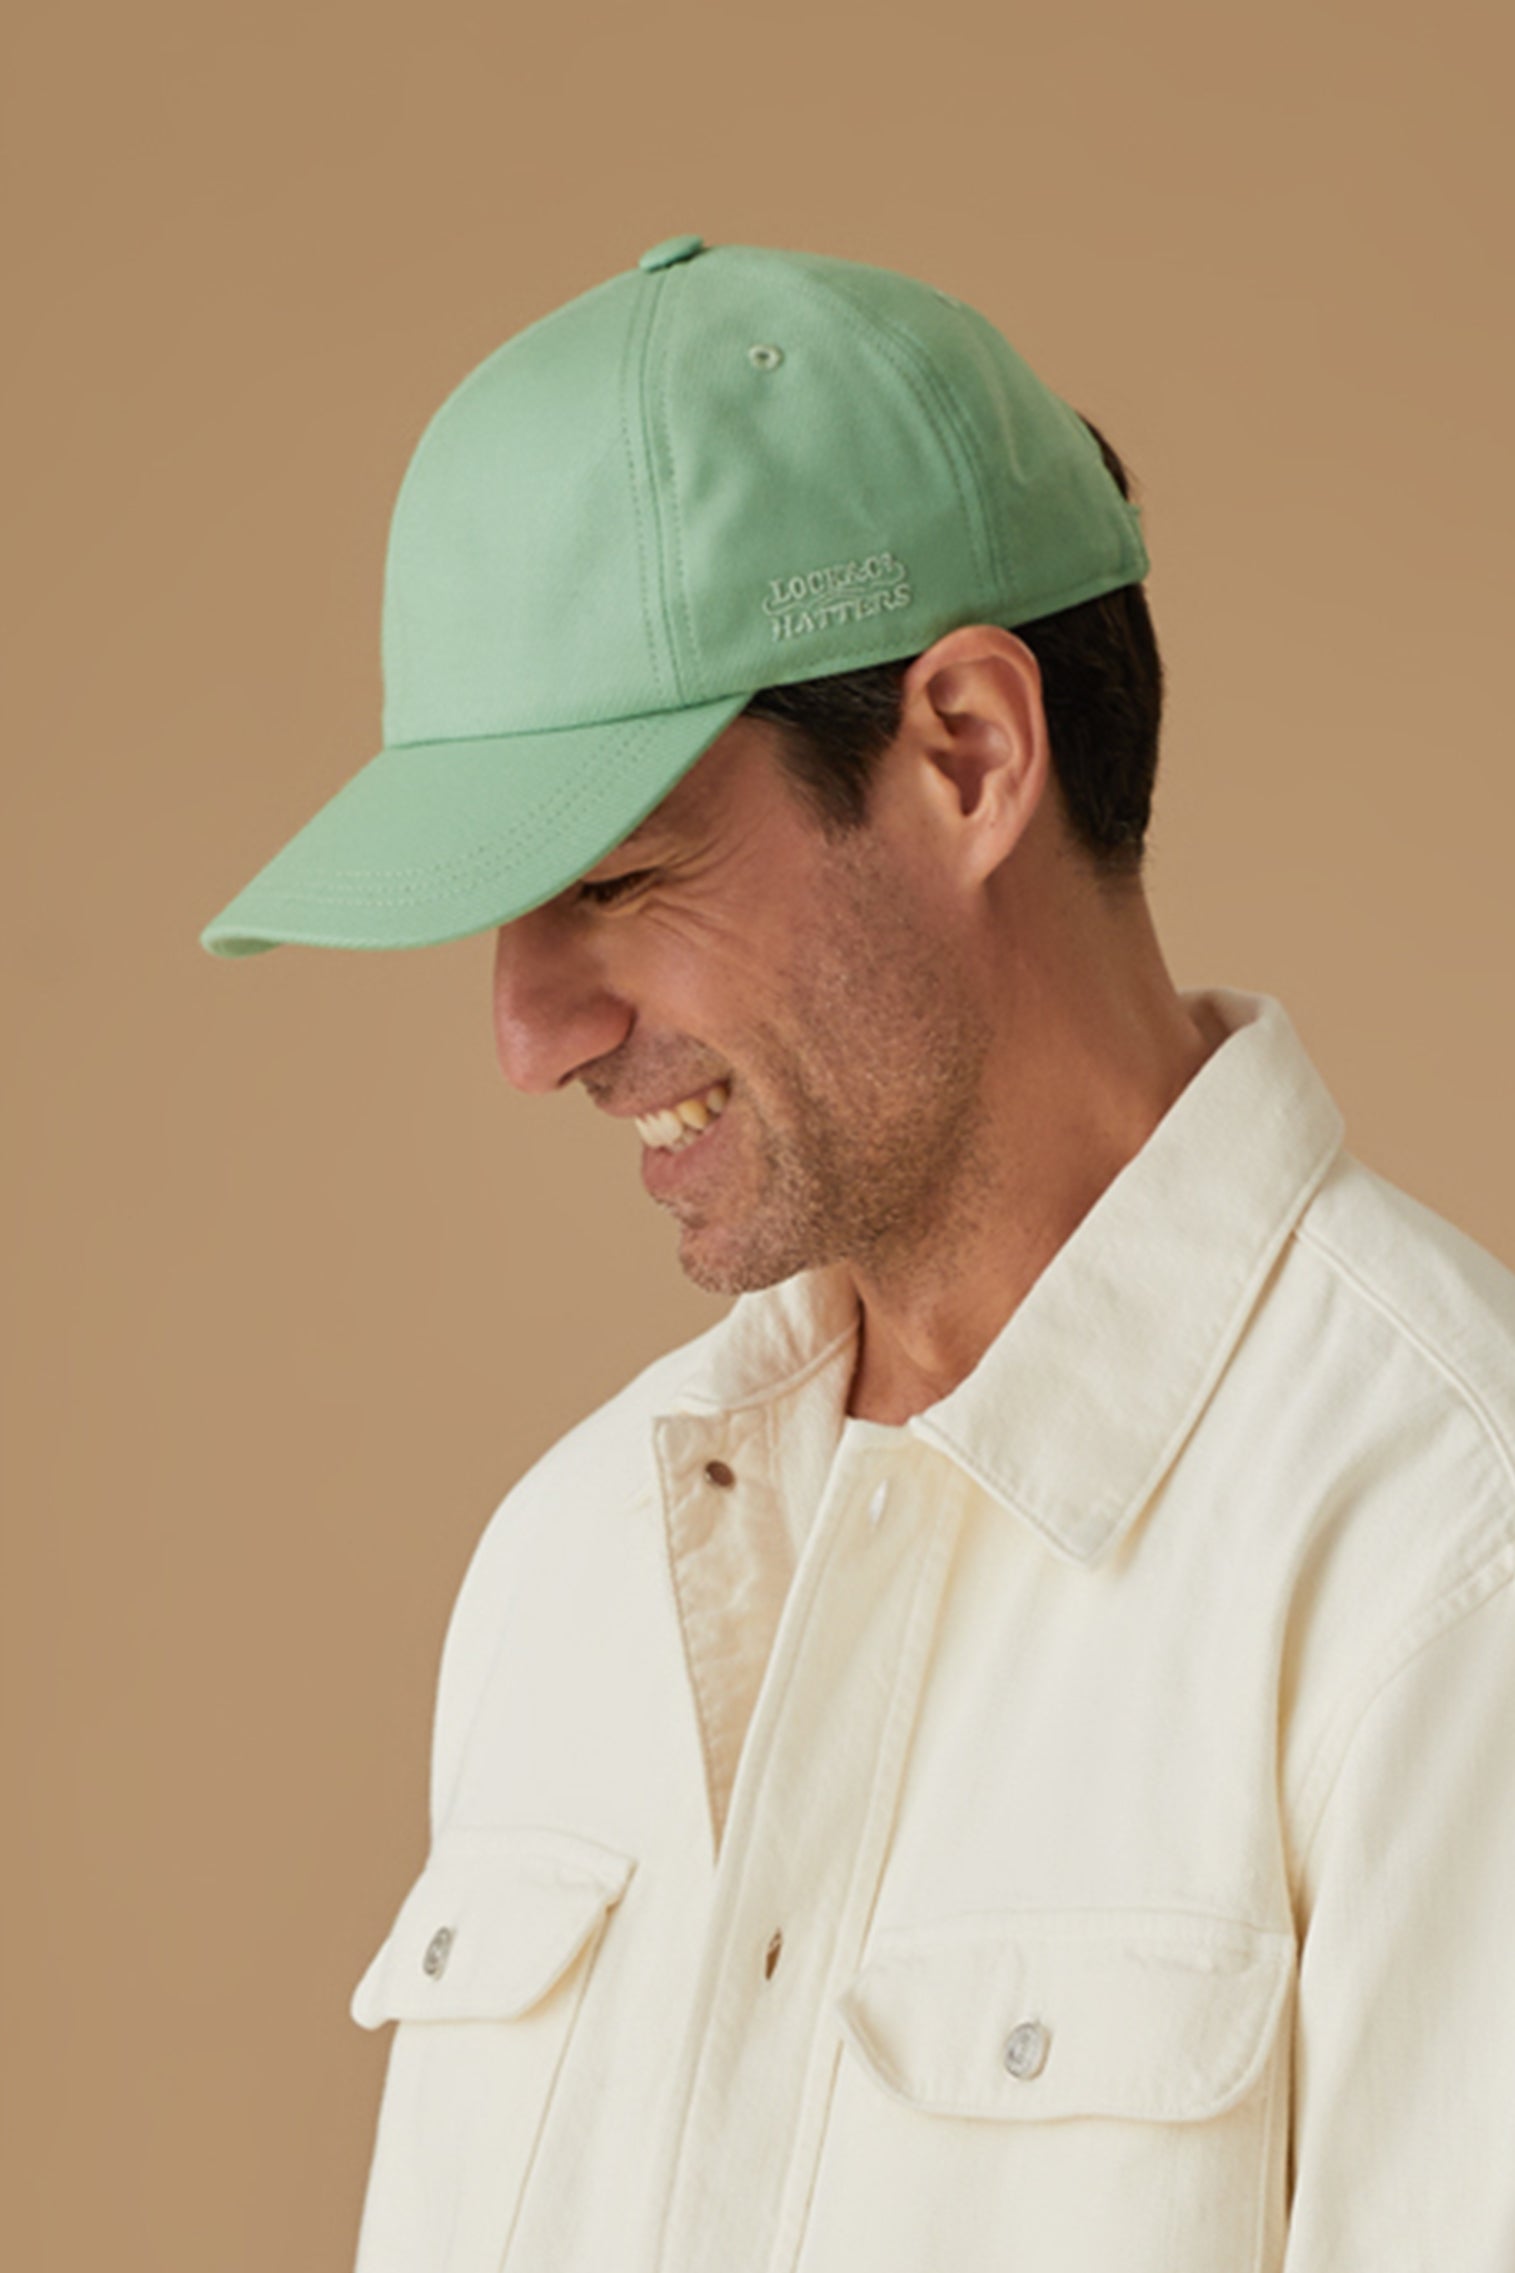 Adjustable Green Baseball Cap - Women's Caps - Lock & Co. Hatters London UK